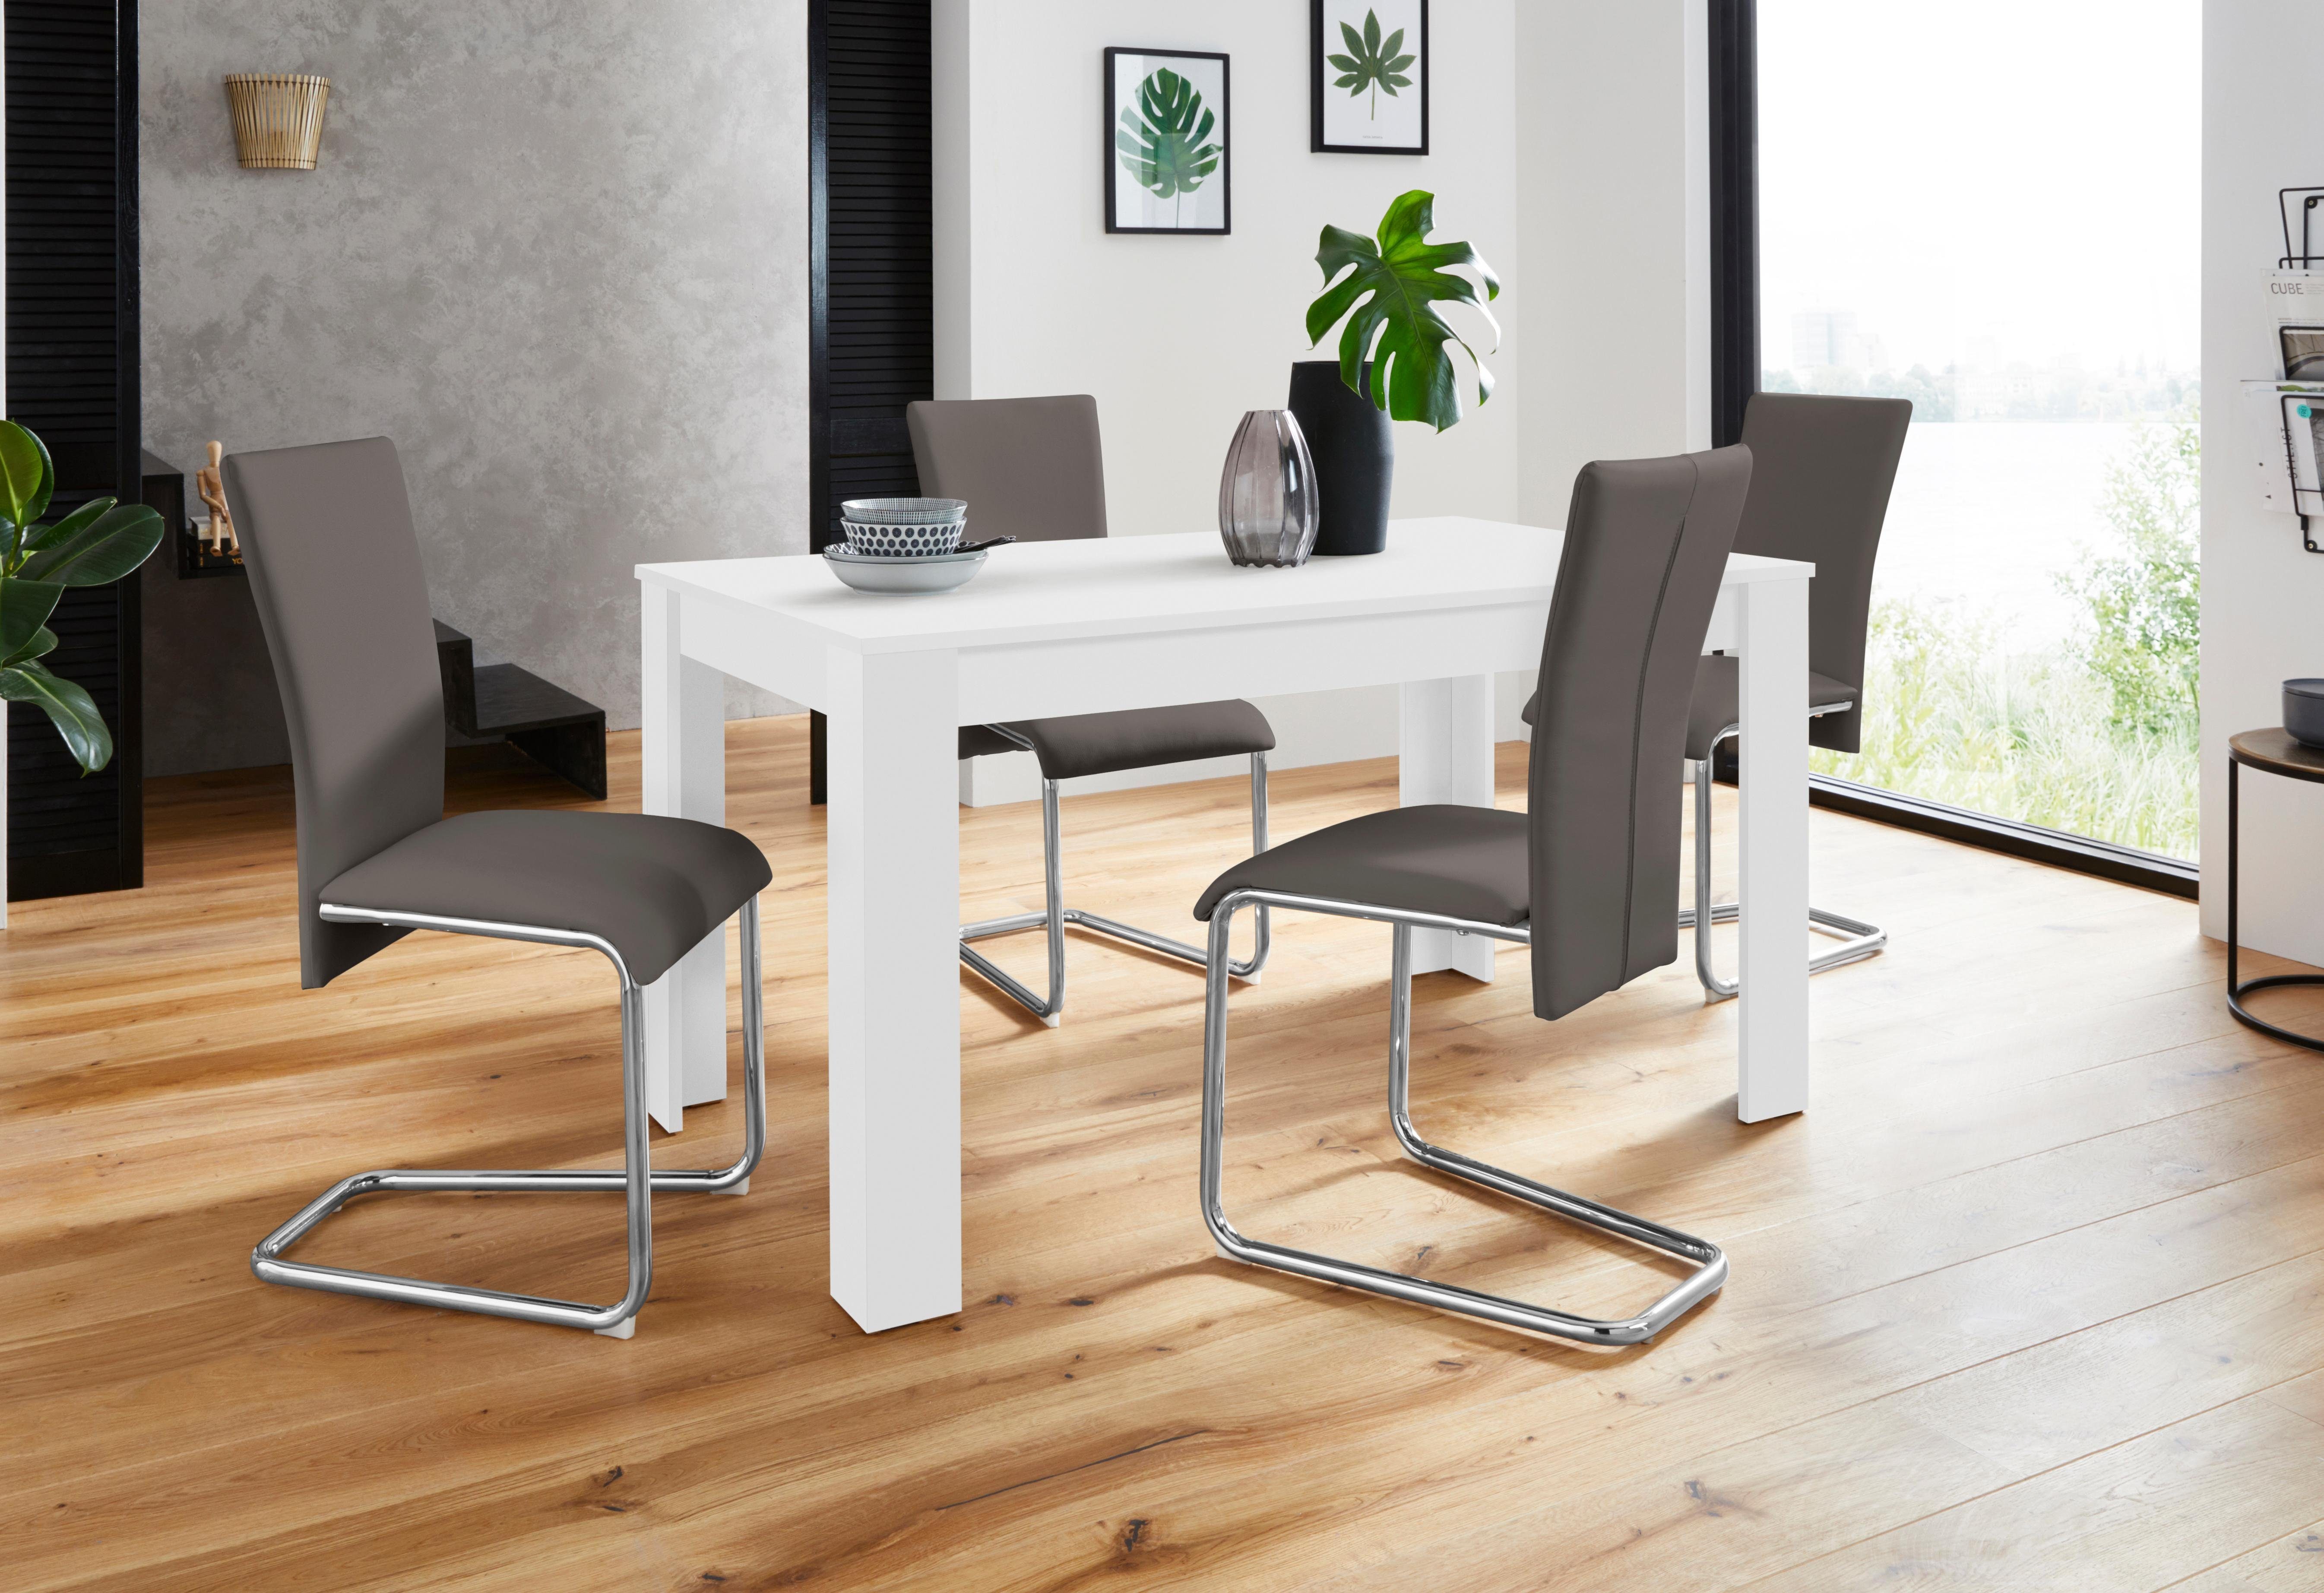 Homexperts Eethoek Nick3-Mulan met 4 stoelen, tafel in wit, breedte 140 cm (set, 5-delig)